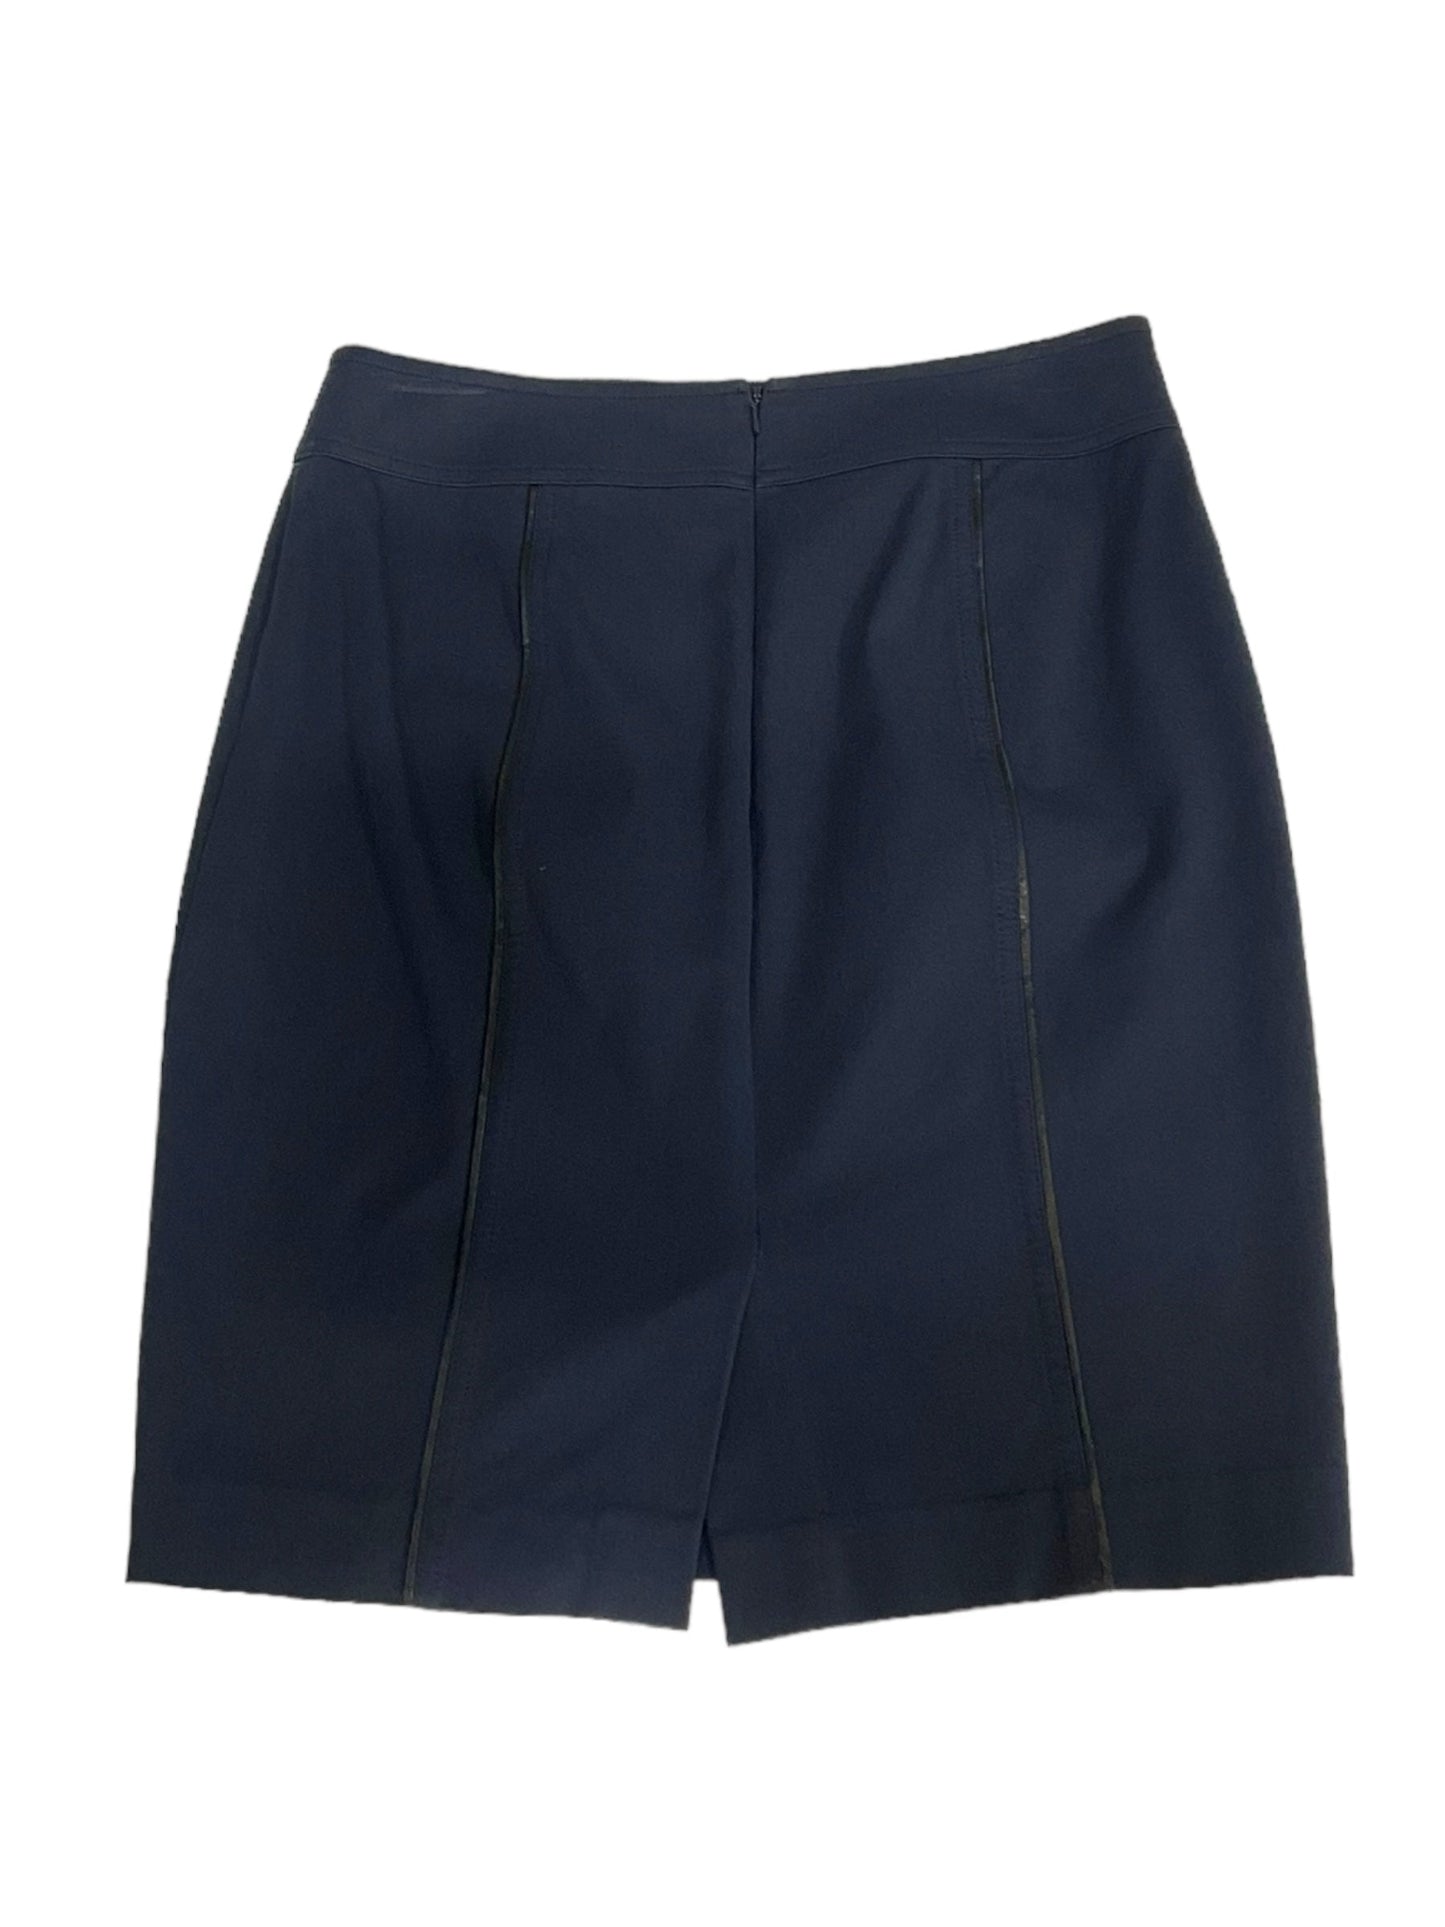 Navy Skirt Midi Ann Taylor, Size 2